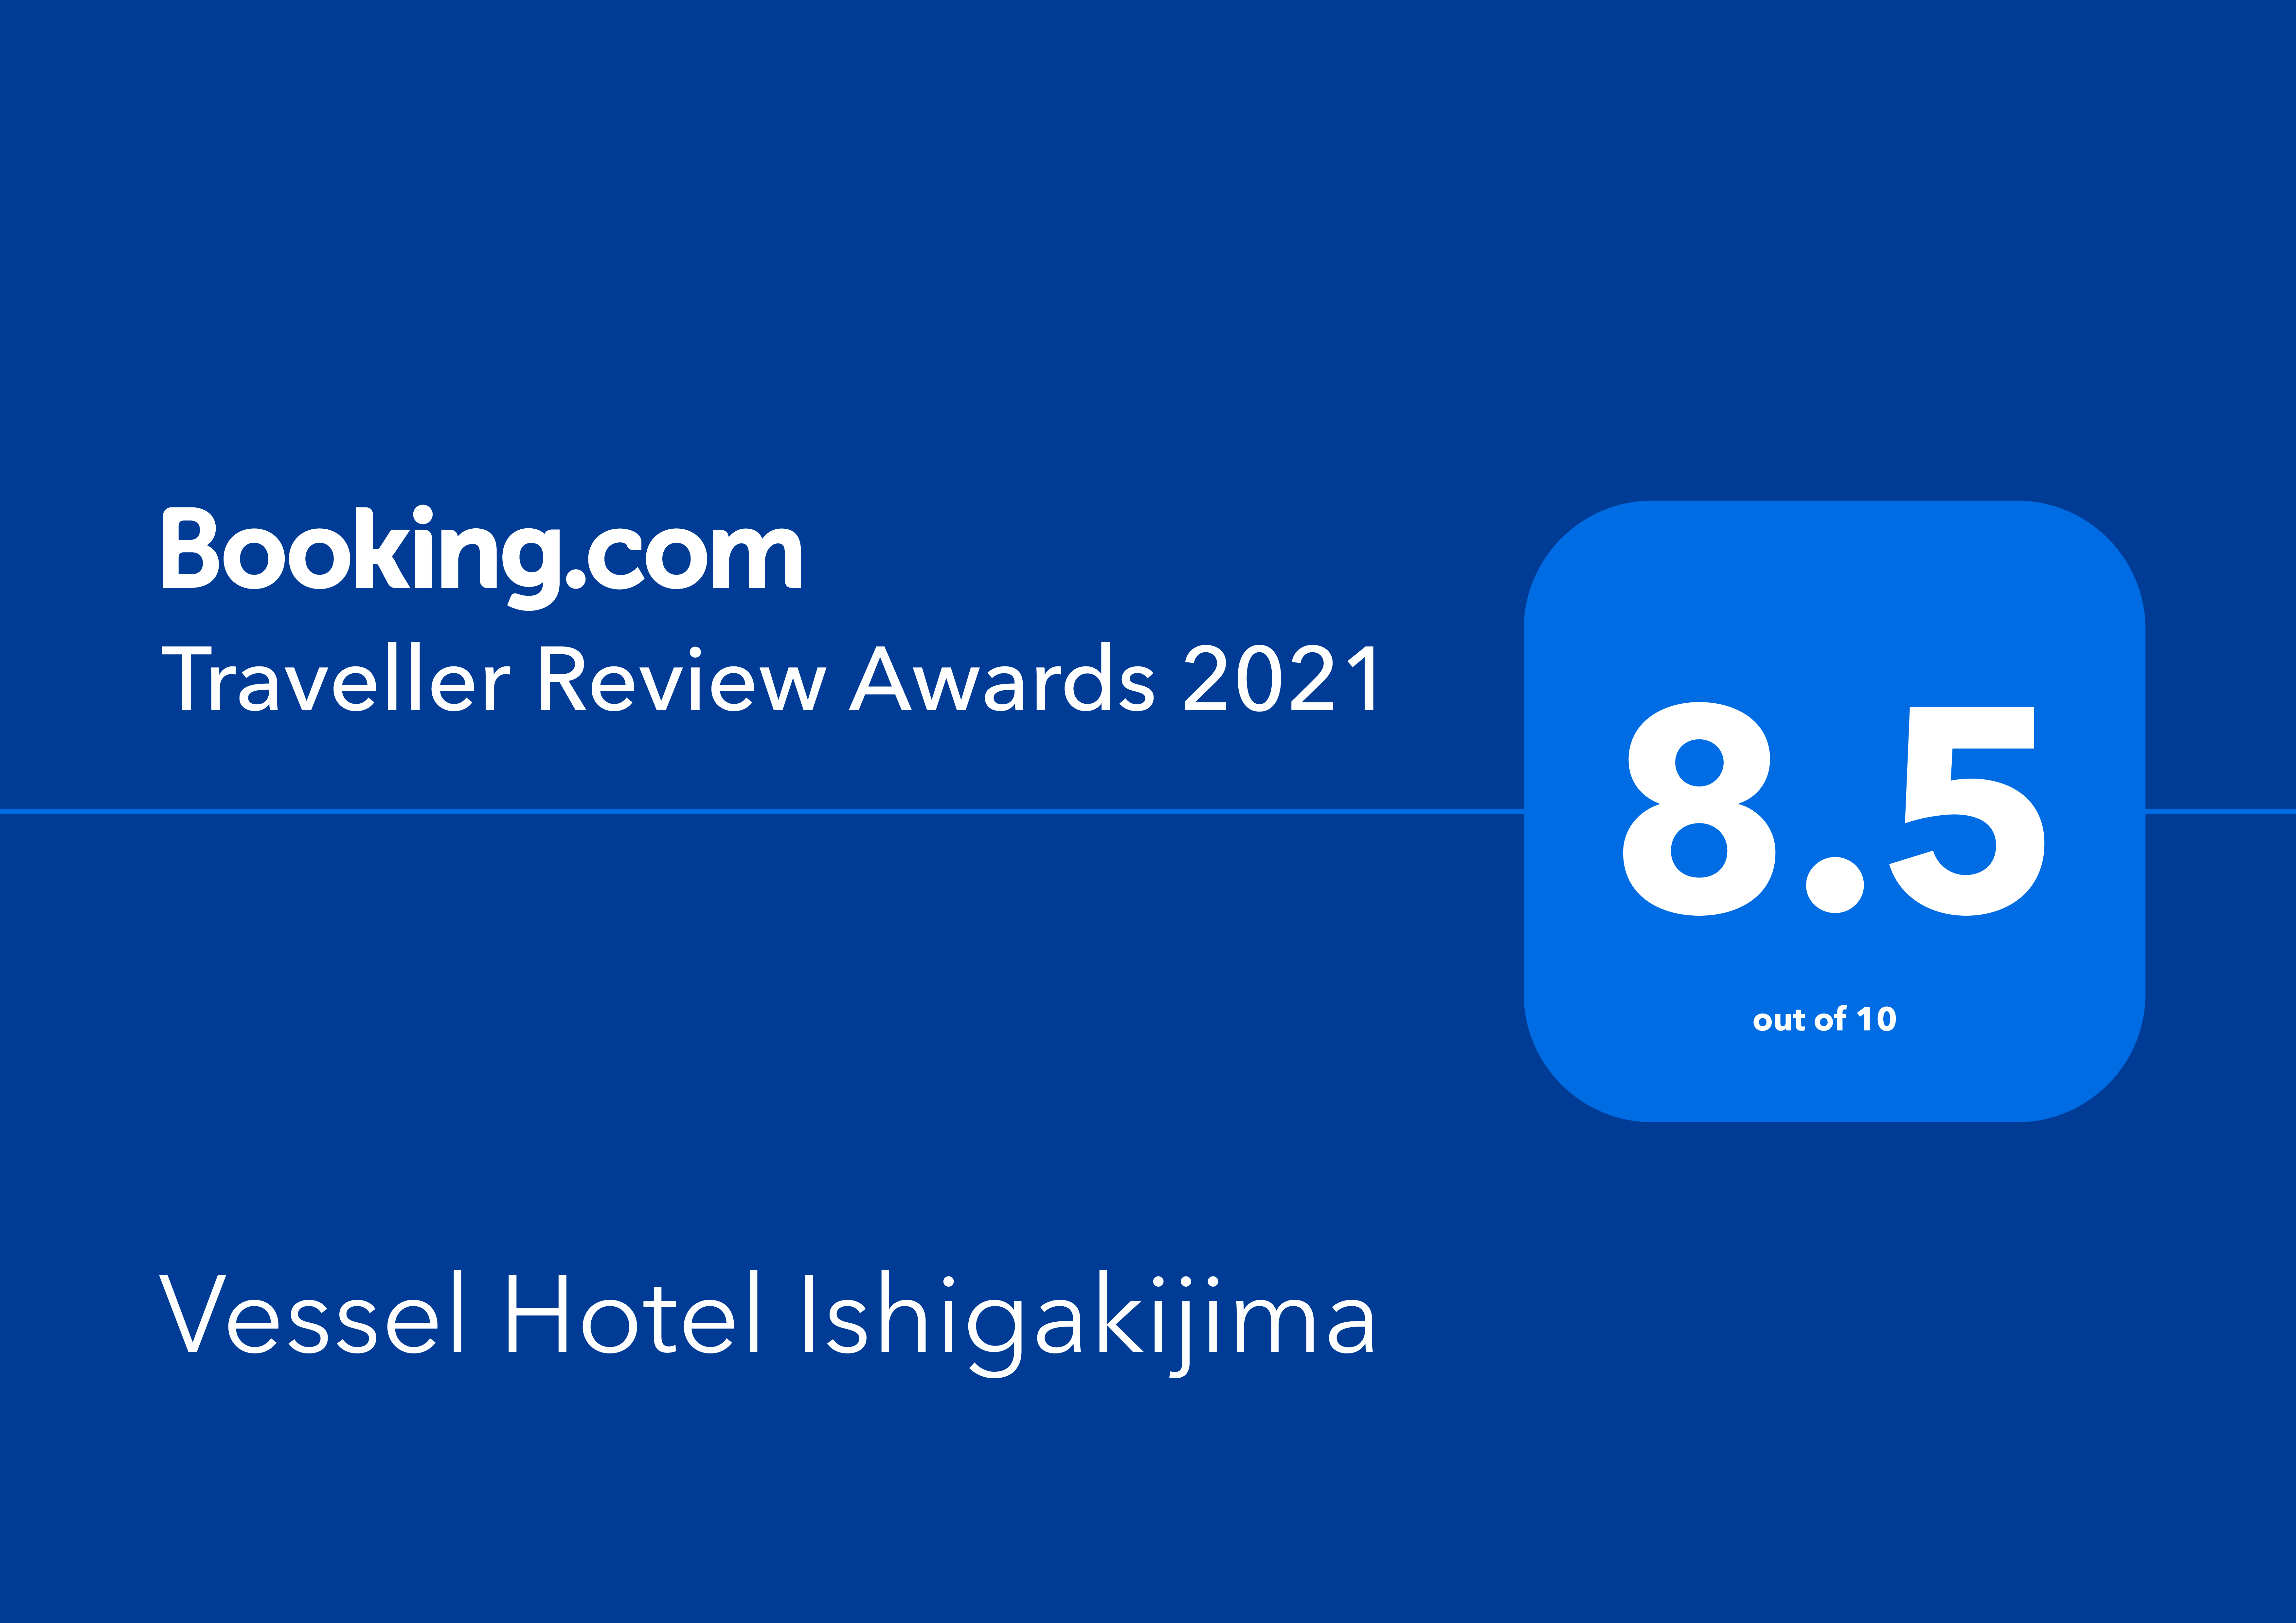 Booking.com“ 2021年旅行者评论奖”获得者